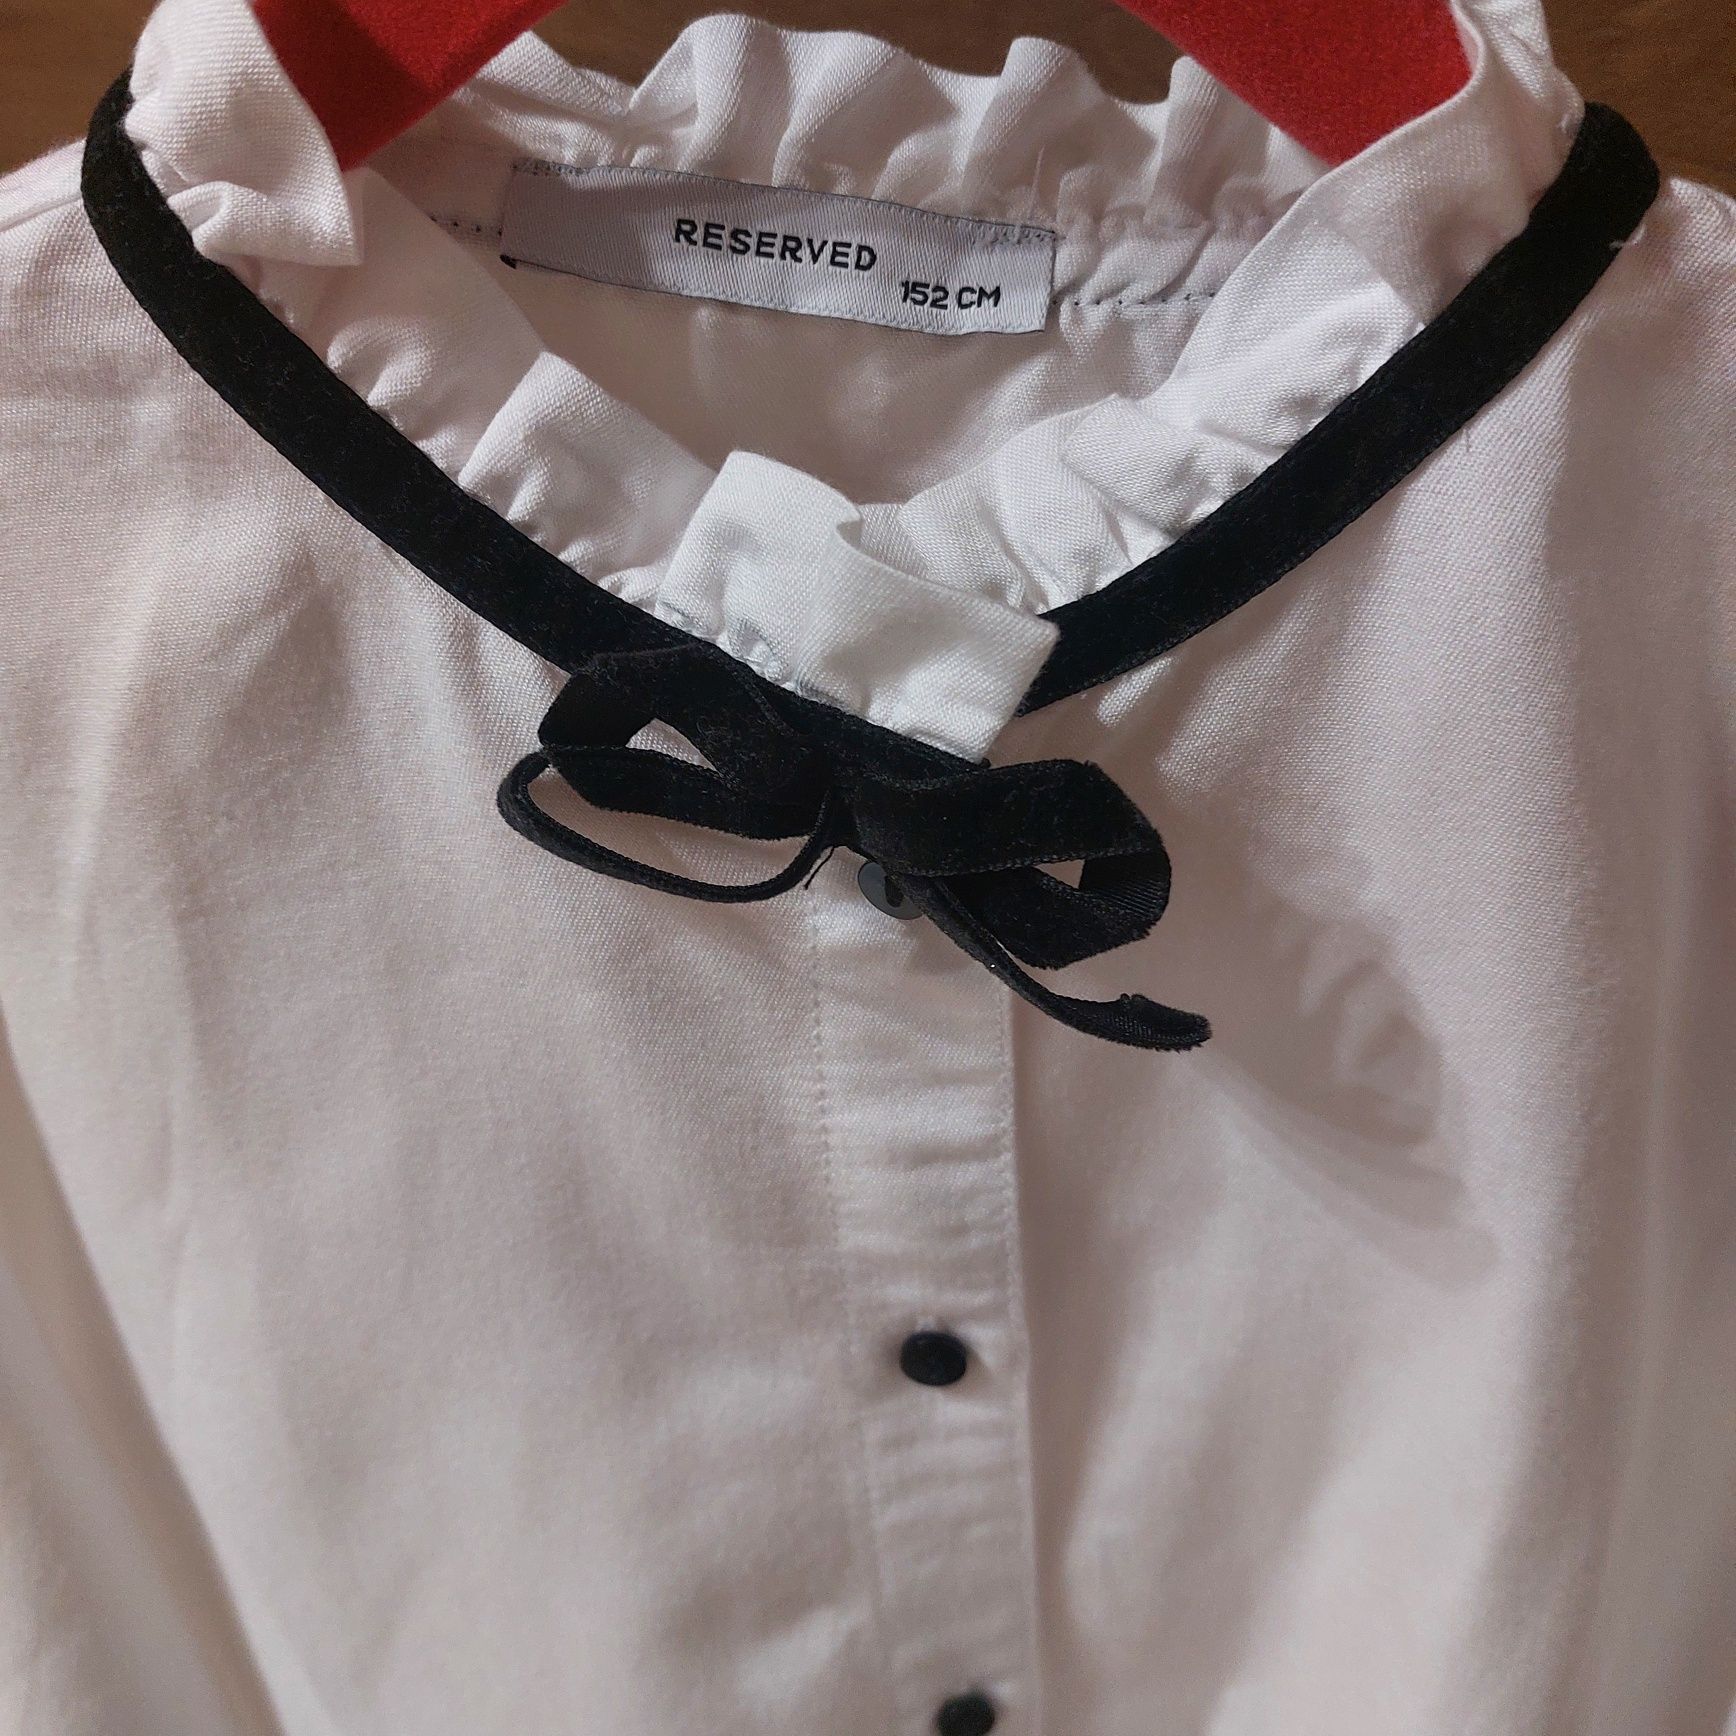 Biała,  galowa bluzka Reserved  r.152